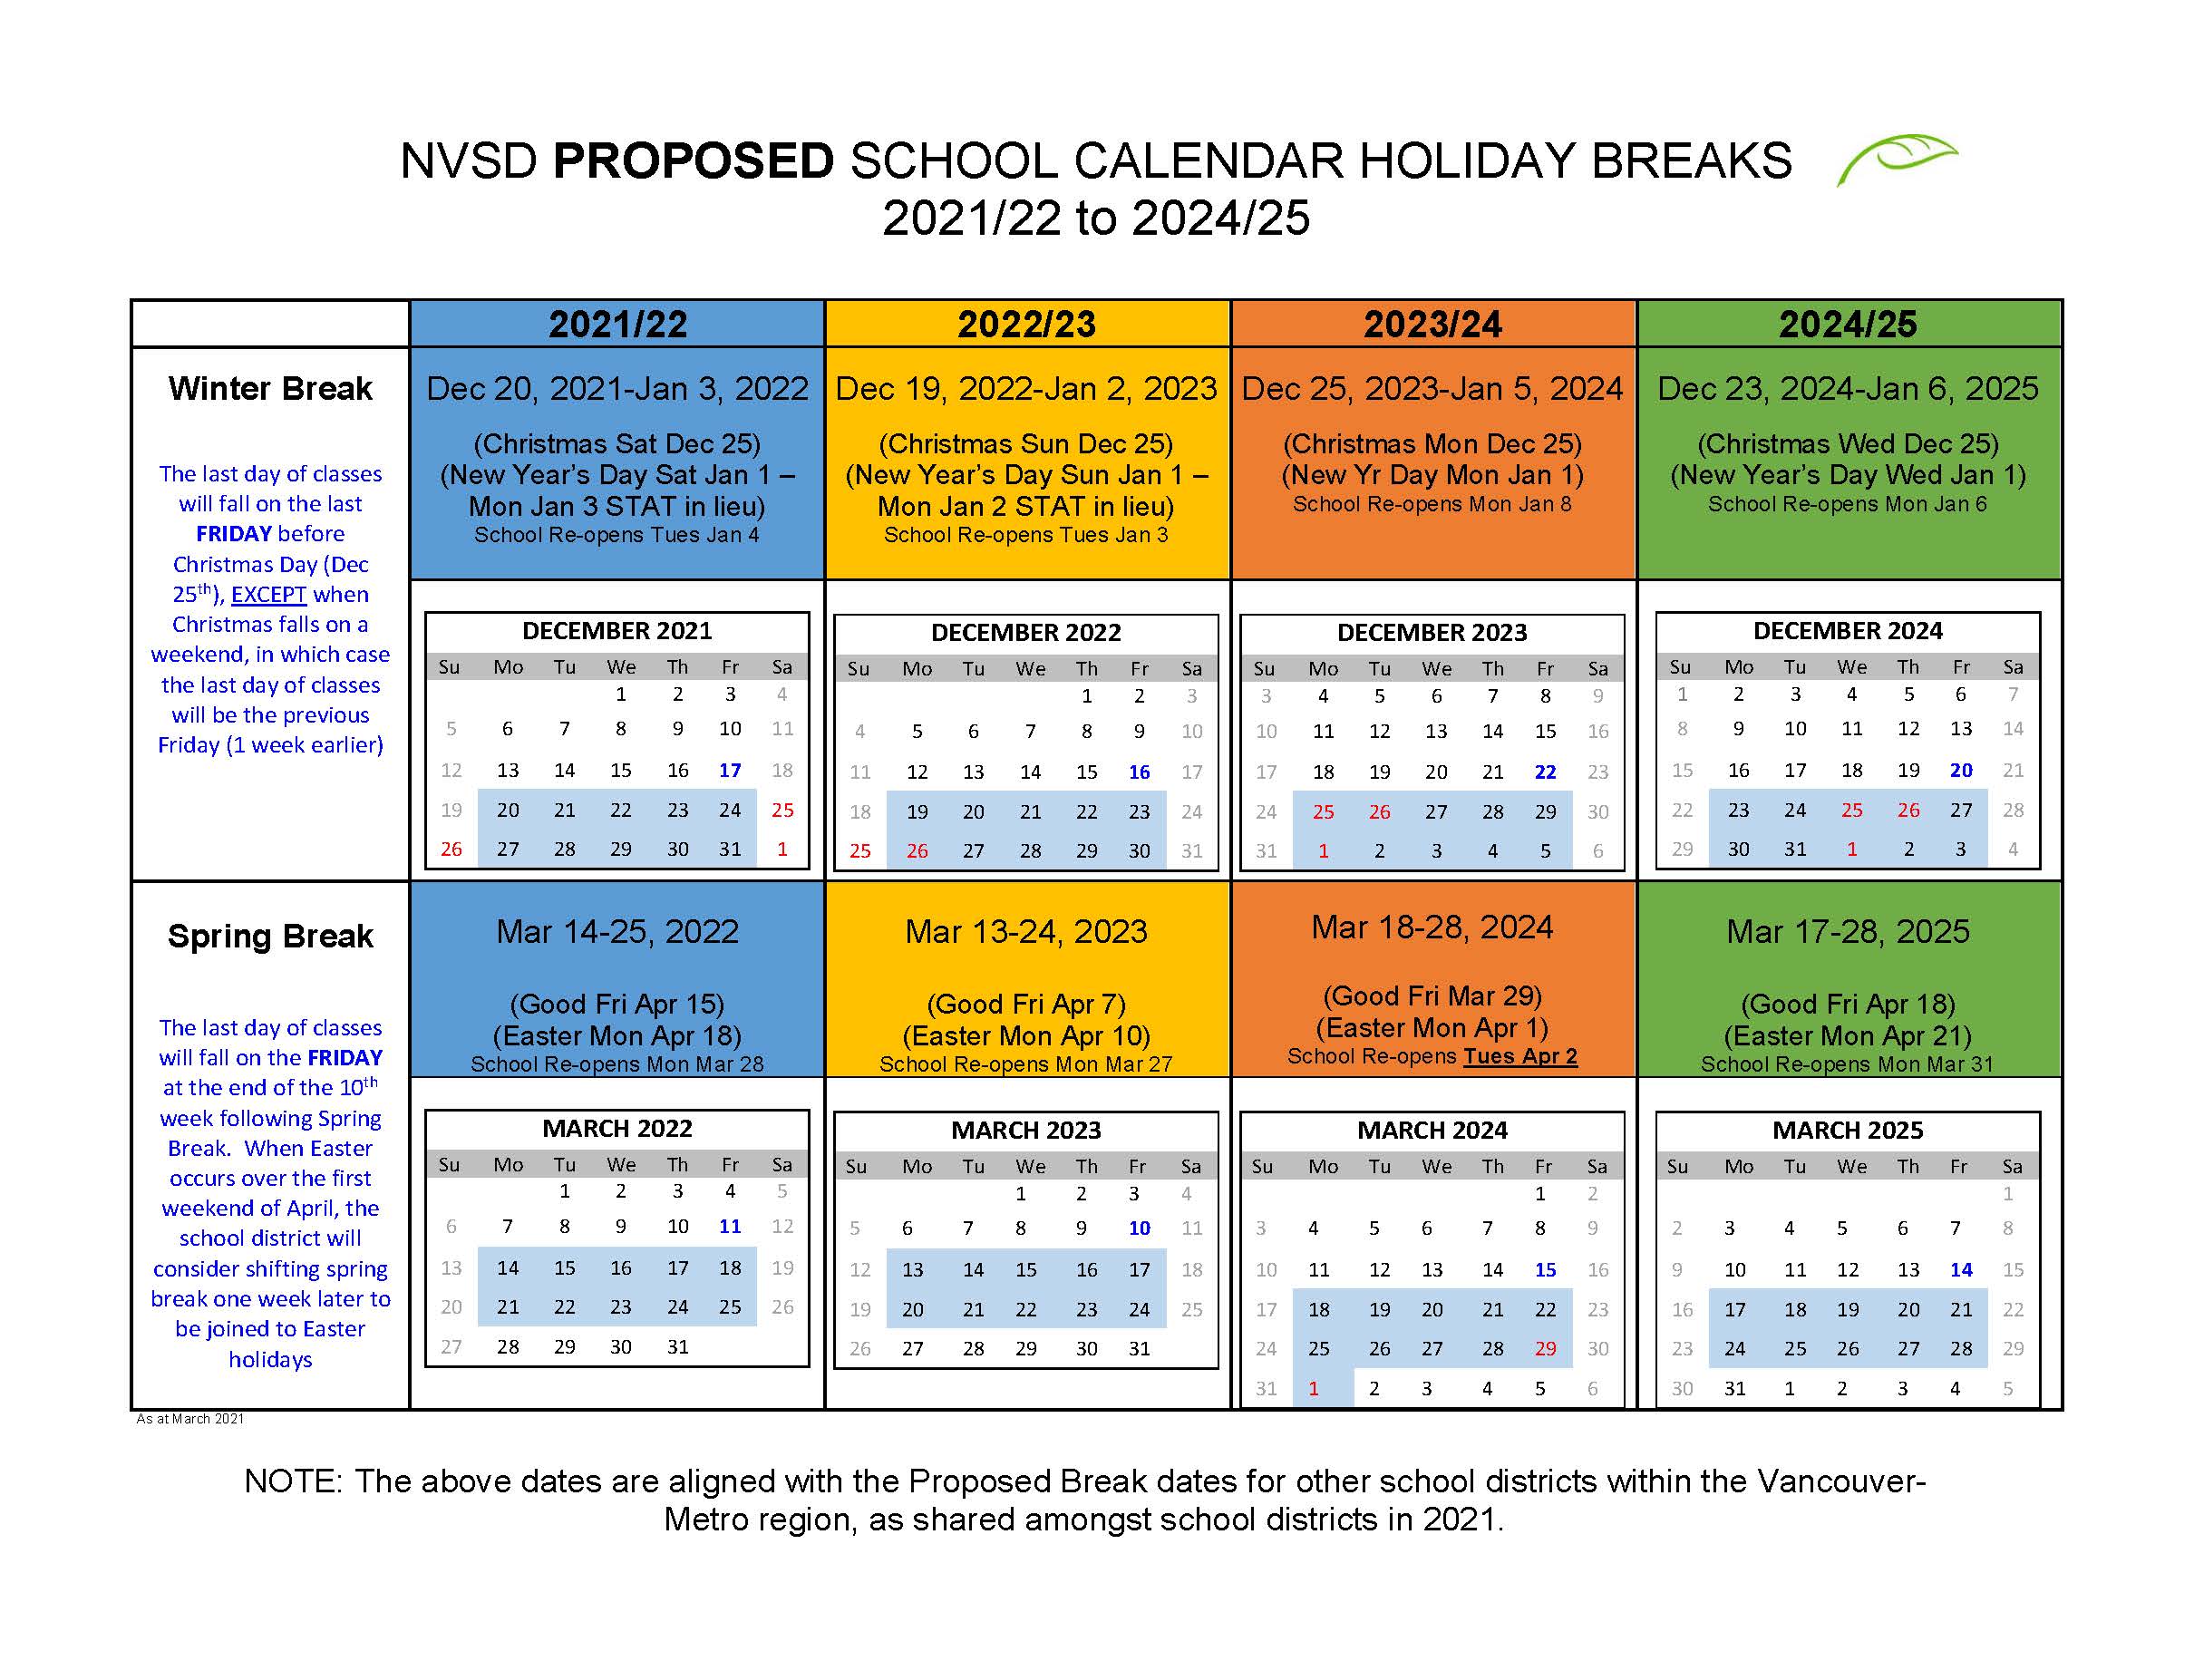 NVSD Break Schedule 2021-2025 FINAL.jpg